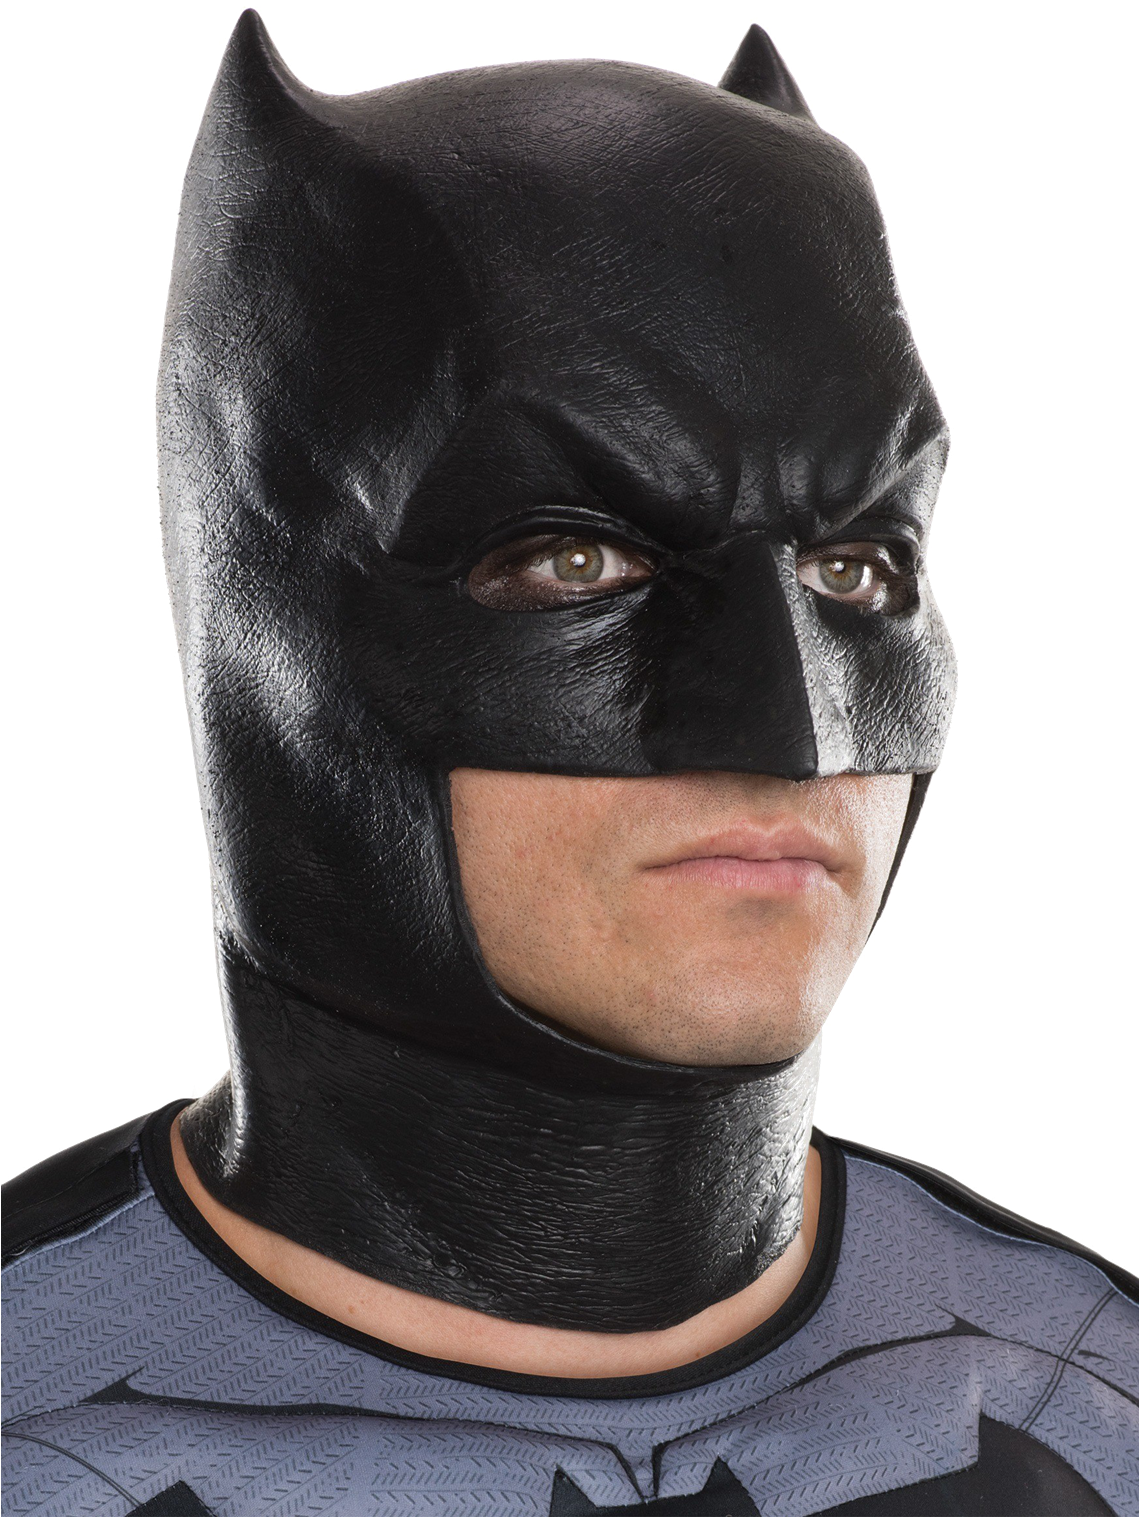 Batman Mask Free Transparent Image HQ PNG Image